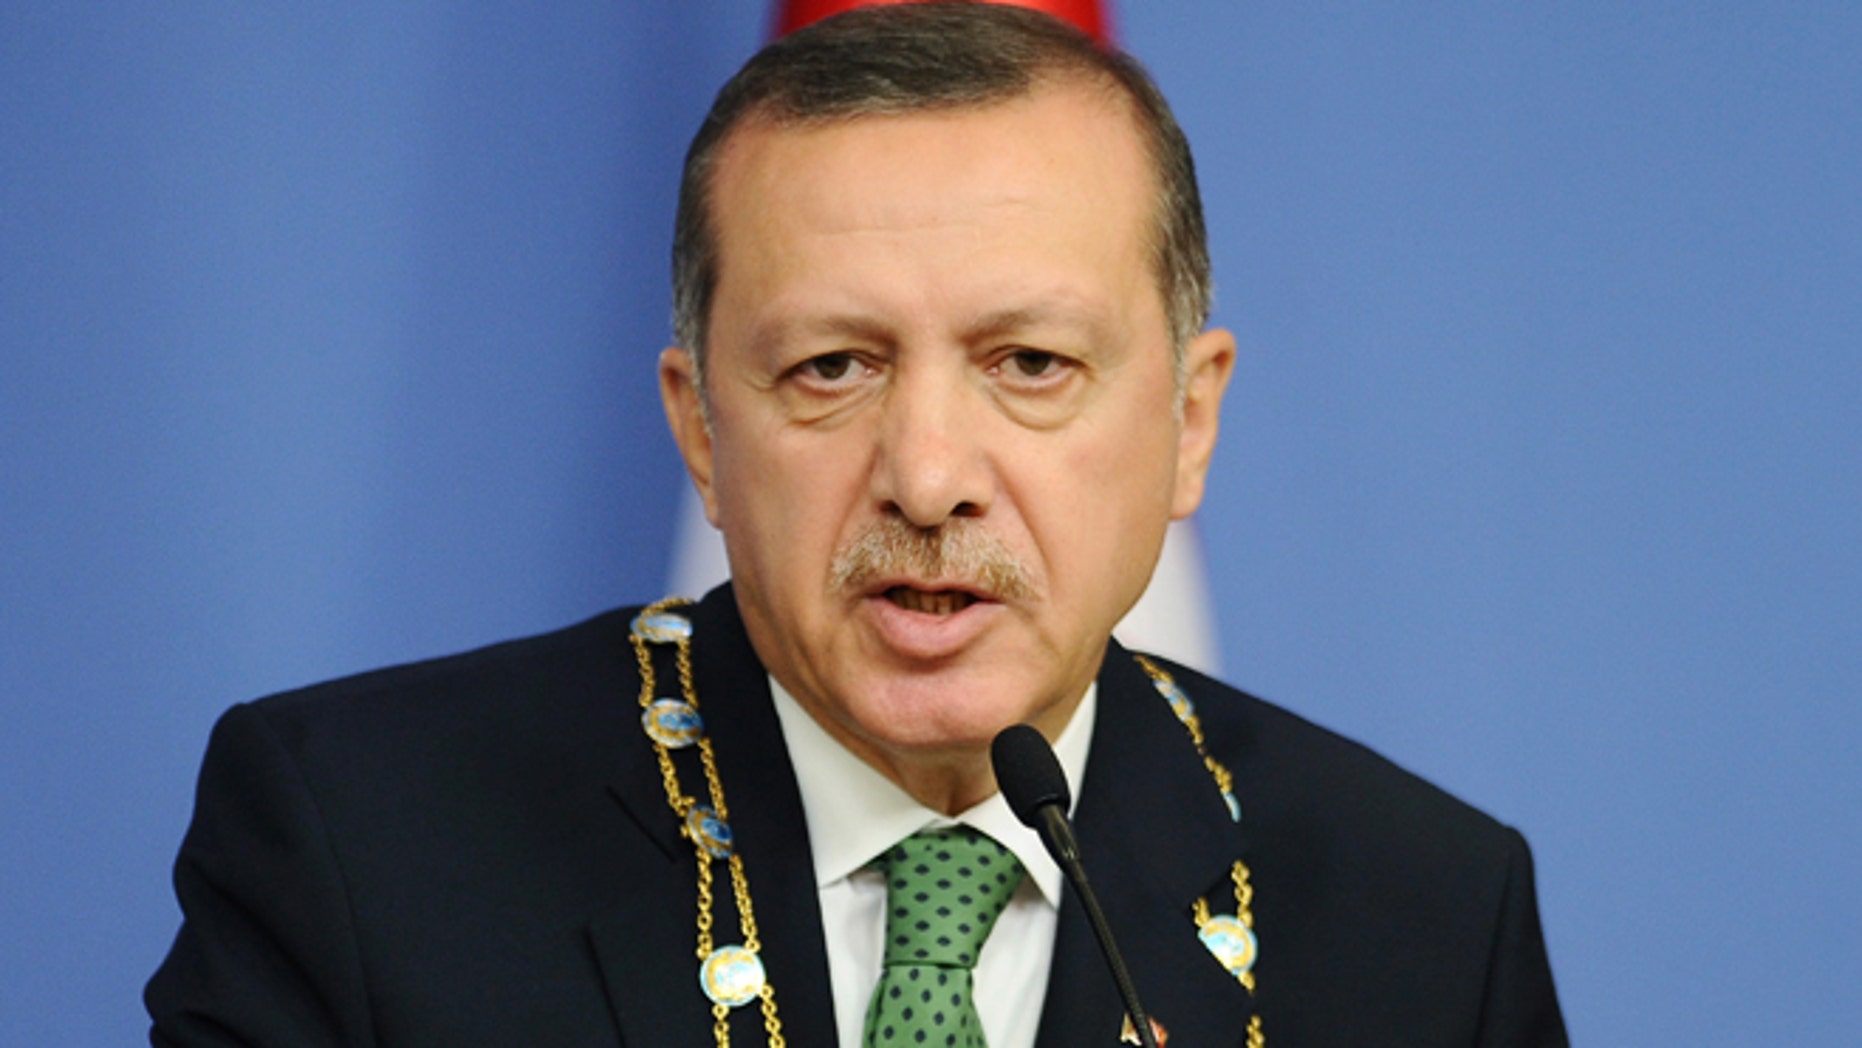 Turkey’s prime minister calls Syria crisis a ‘humanitarian tragedy